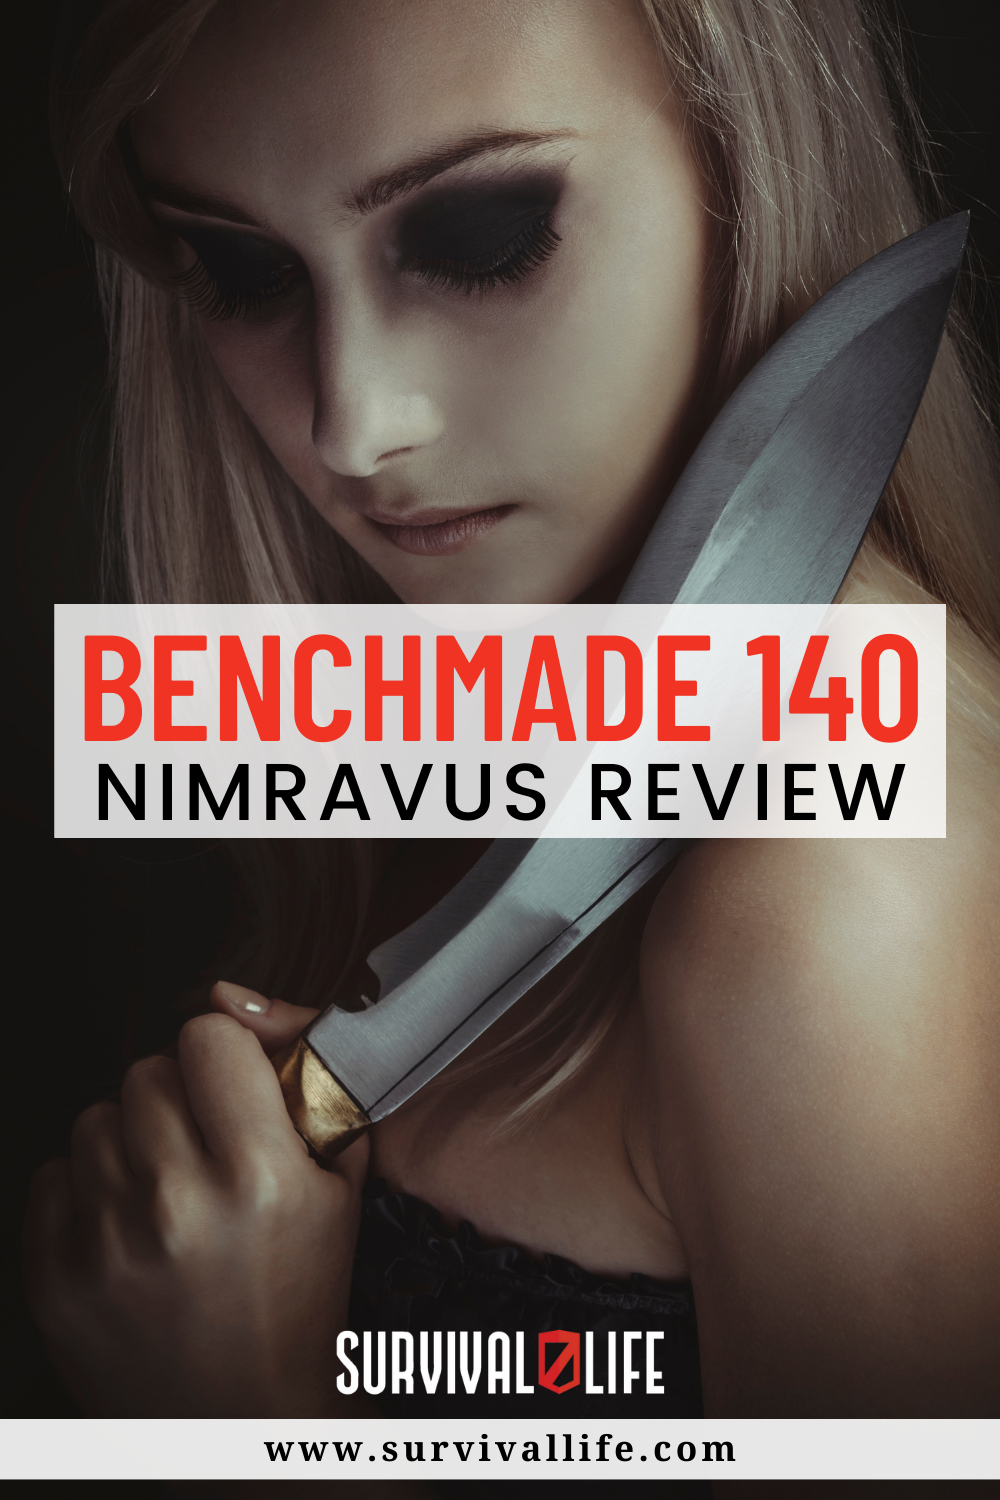 Benchmade 140 Nimravus Review